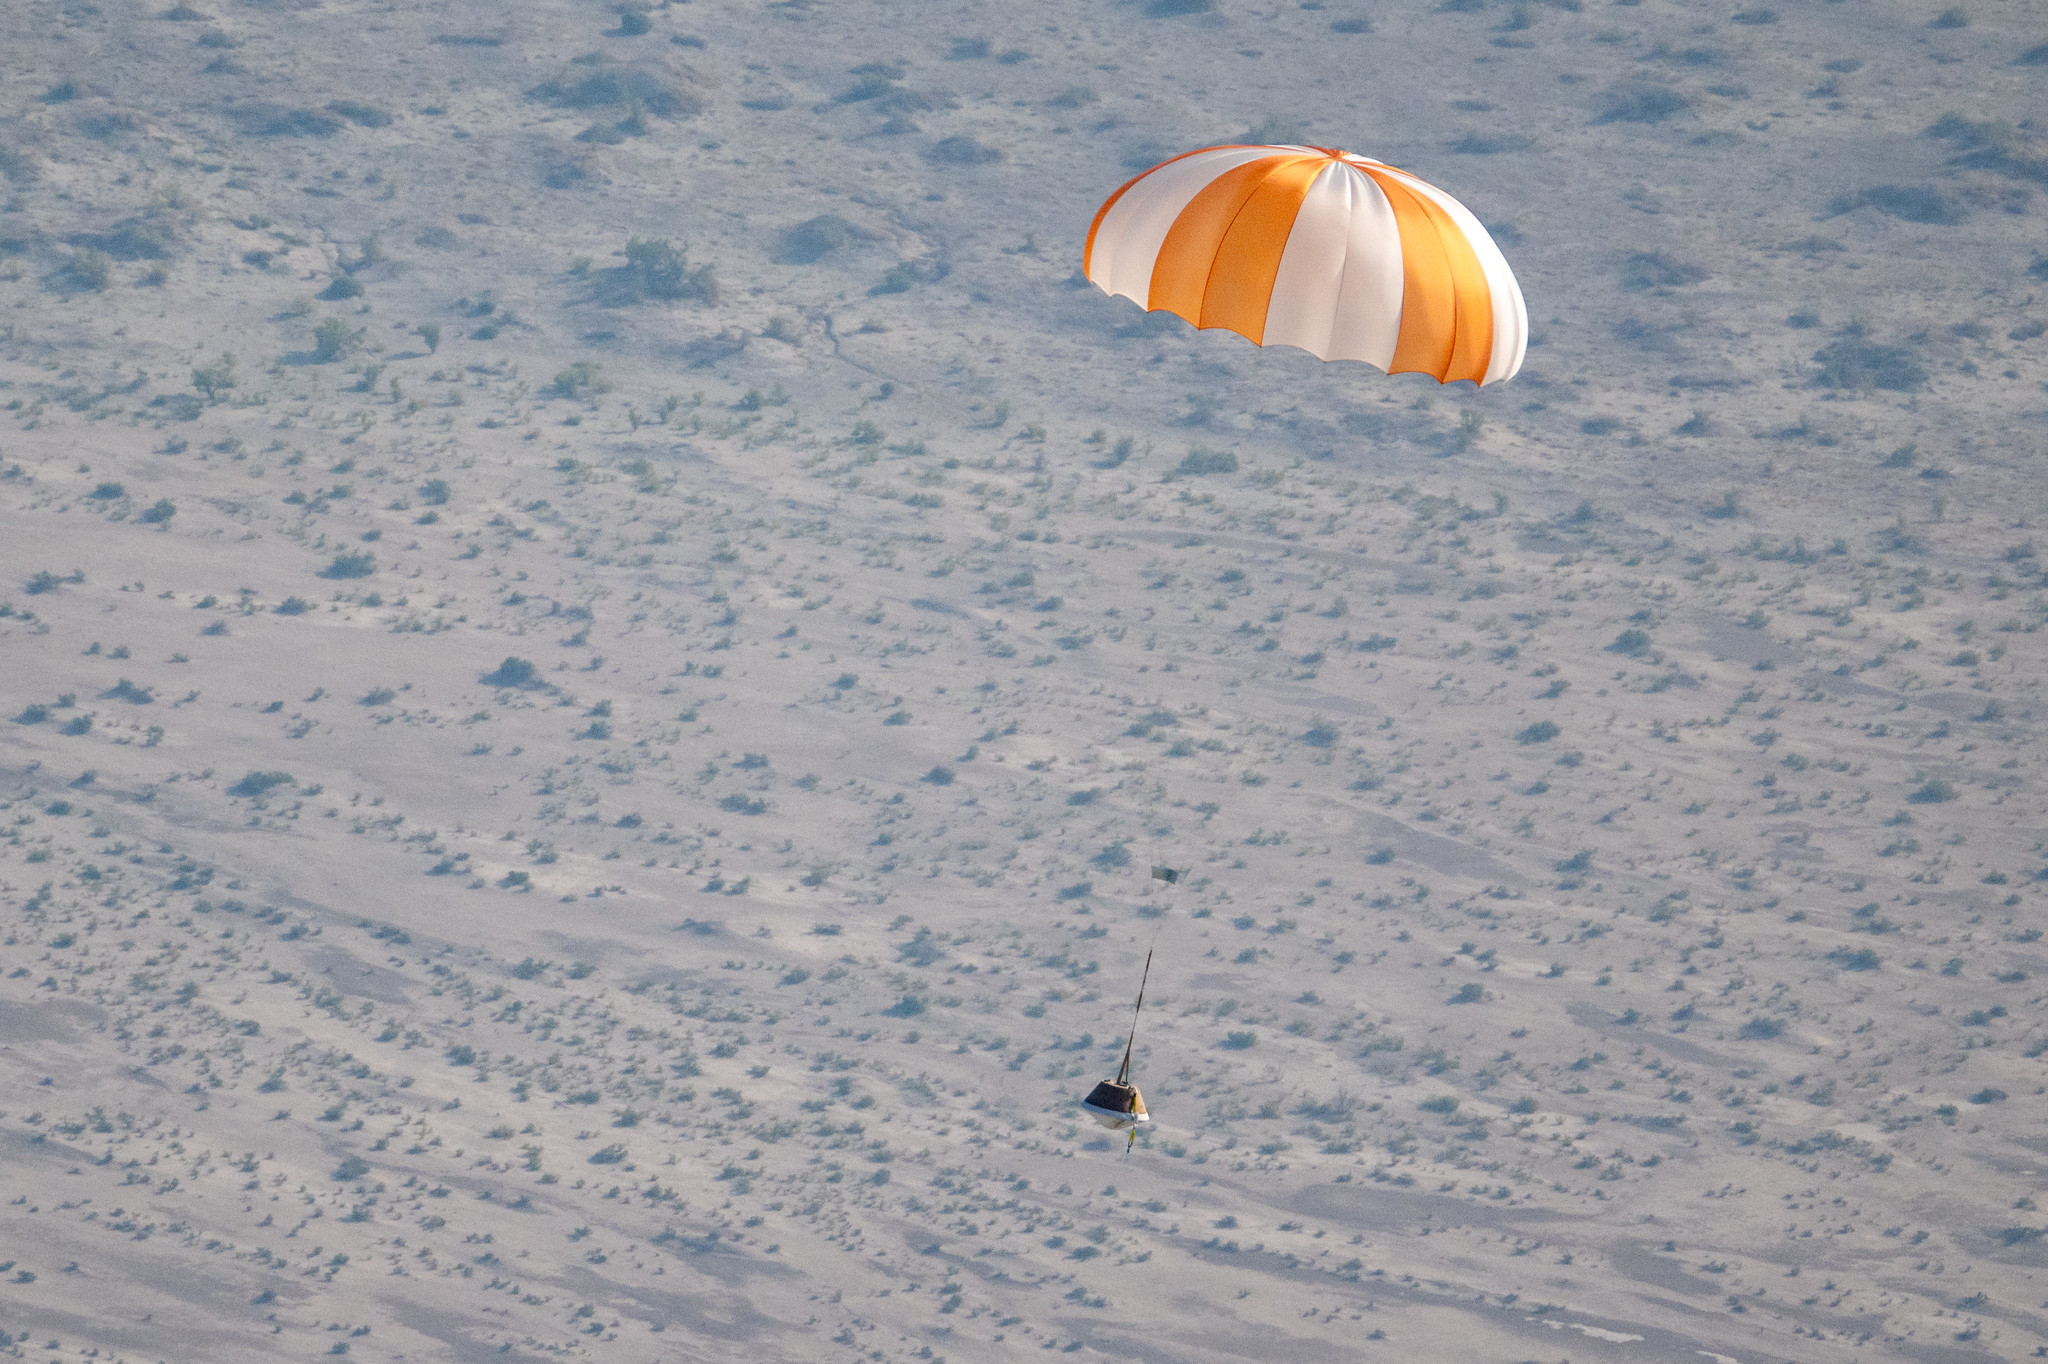 The sample return capsule from NASA’s OSIRIS-REx mission.